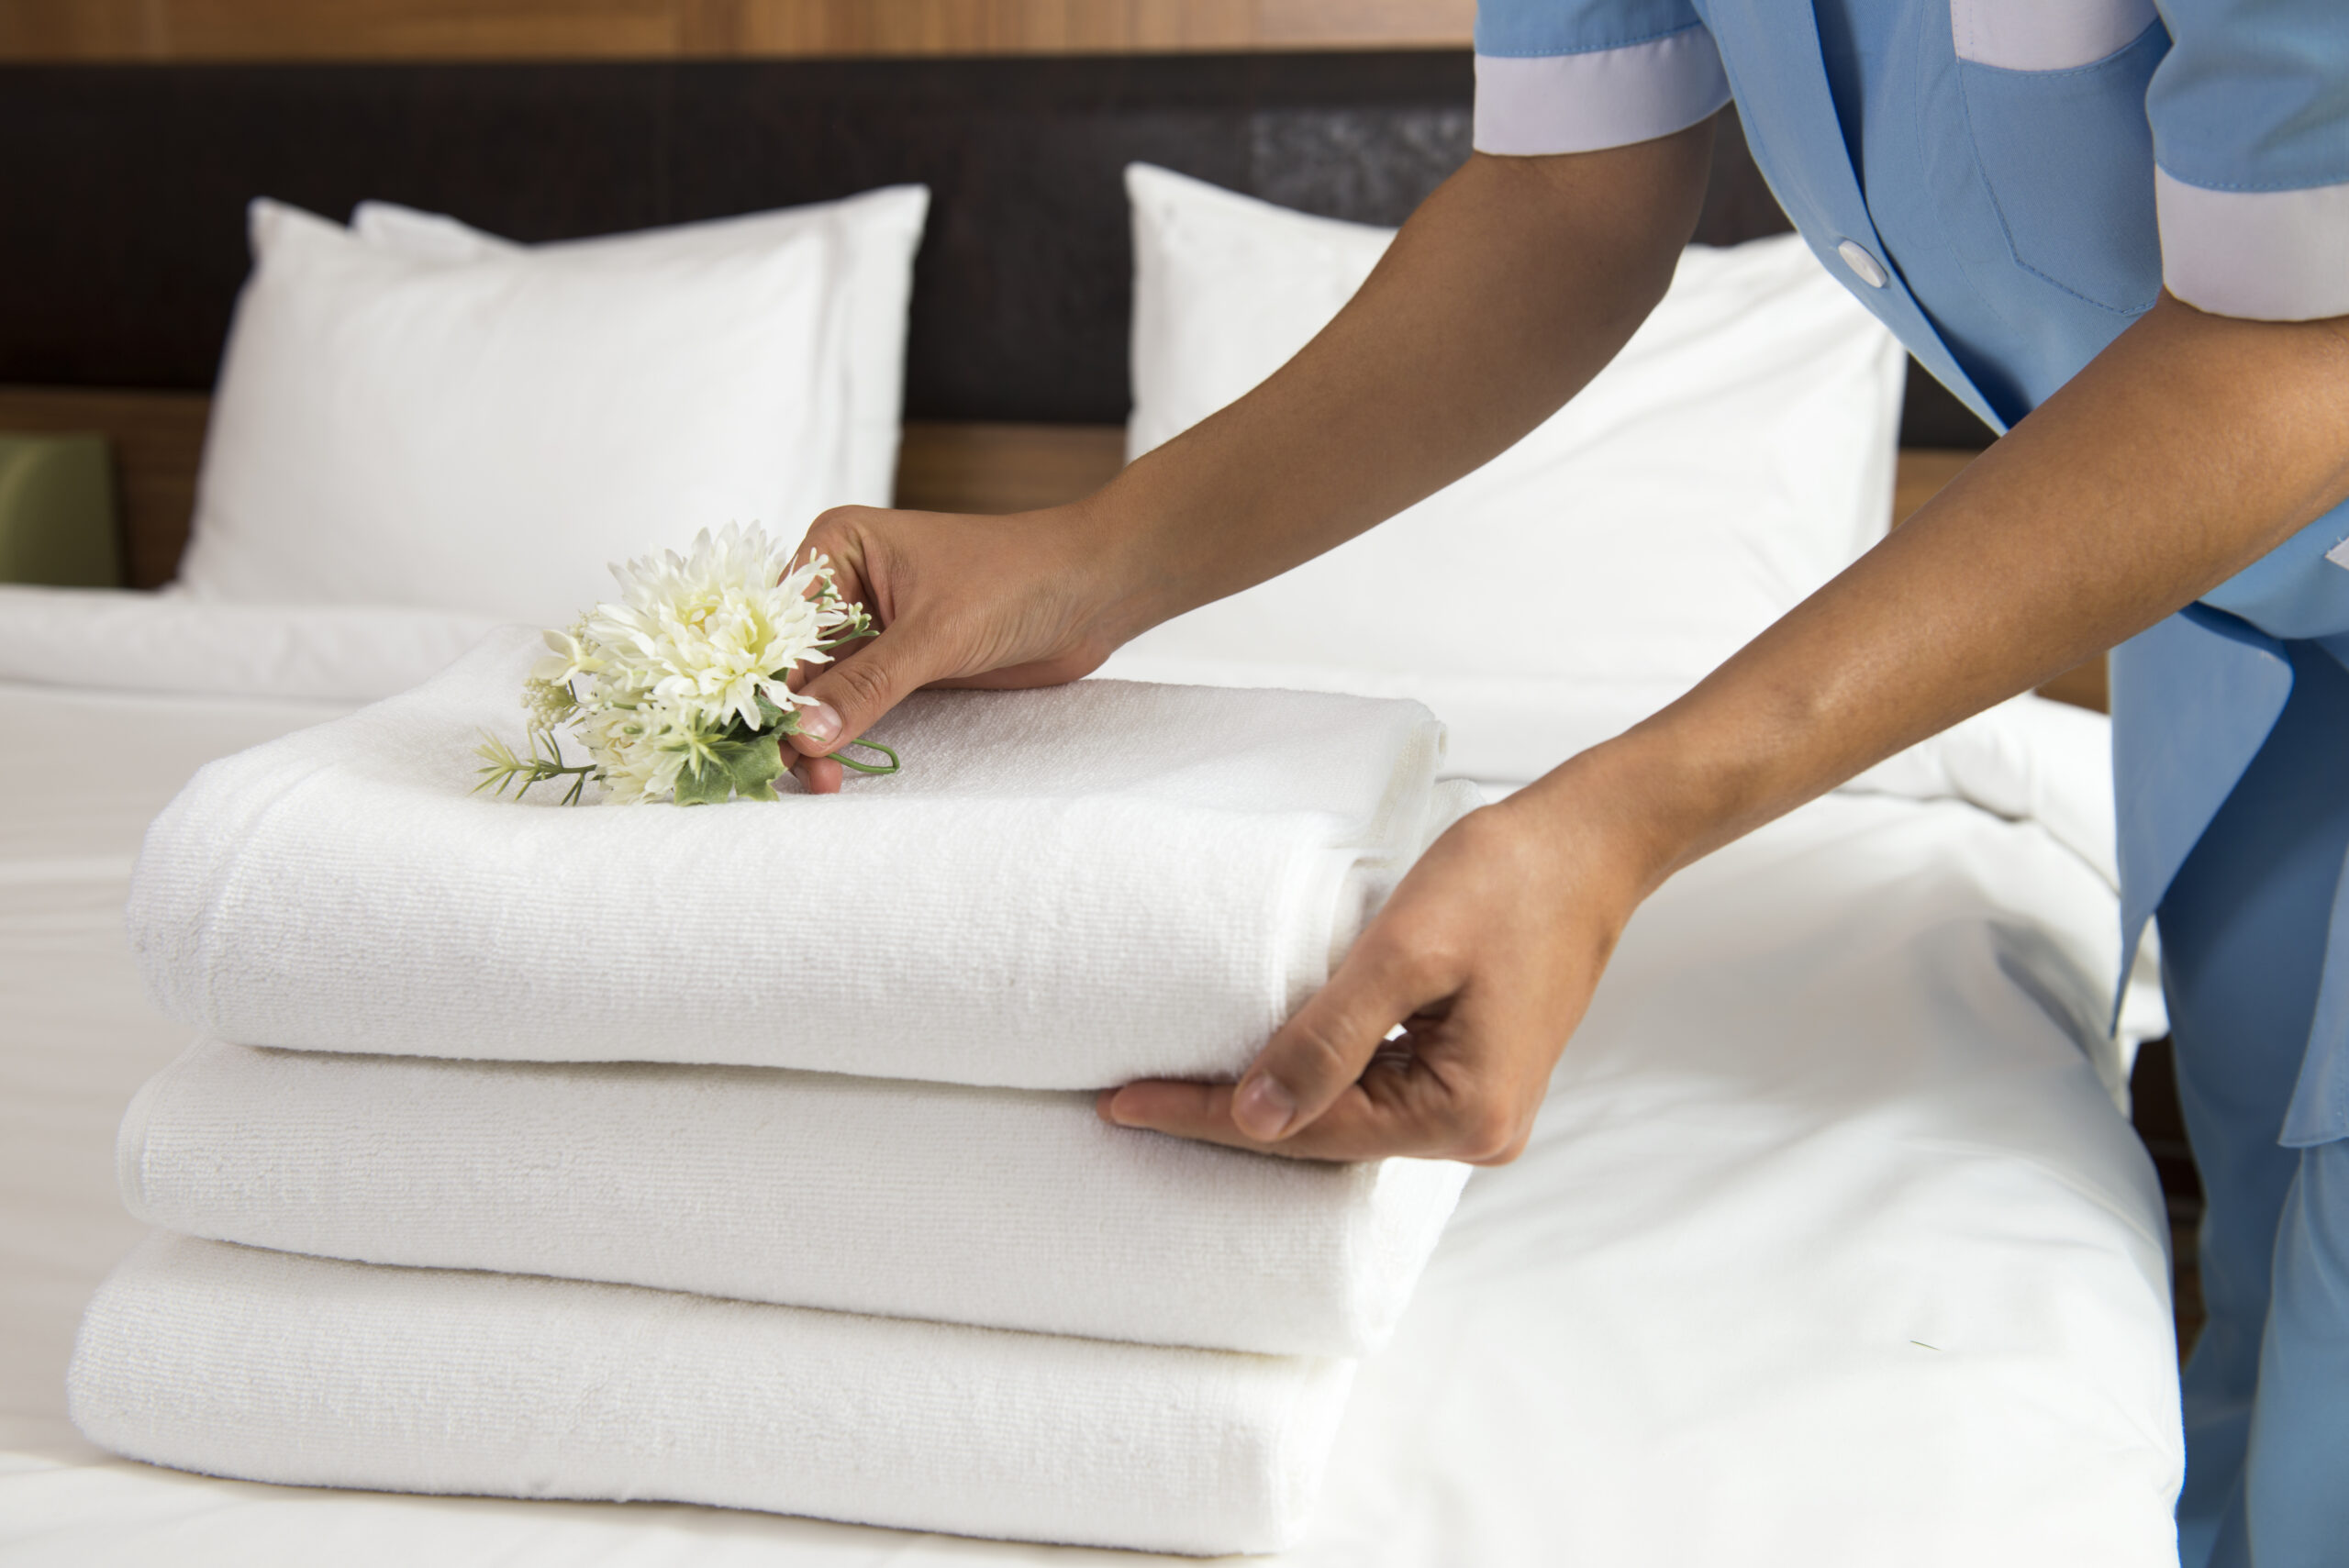 housekeeper placing flower on stack of towels